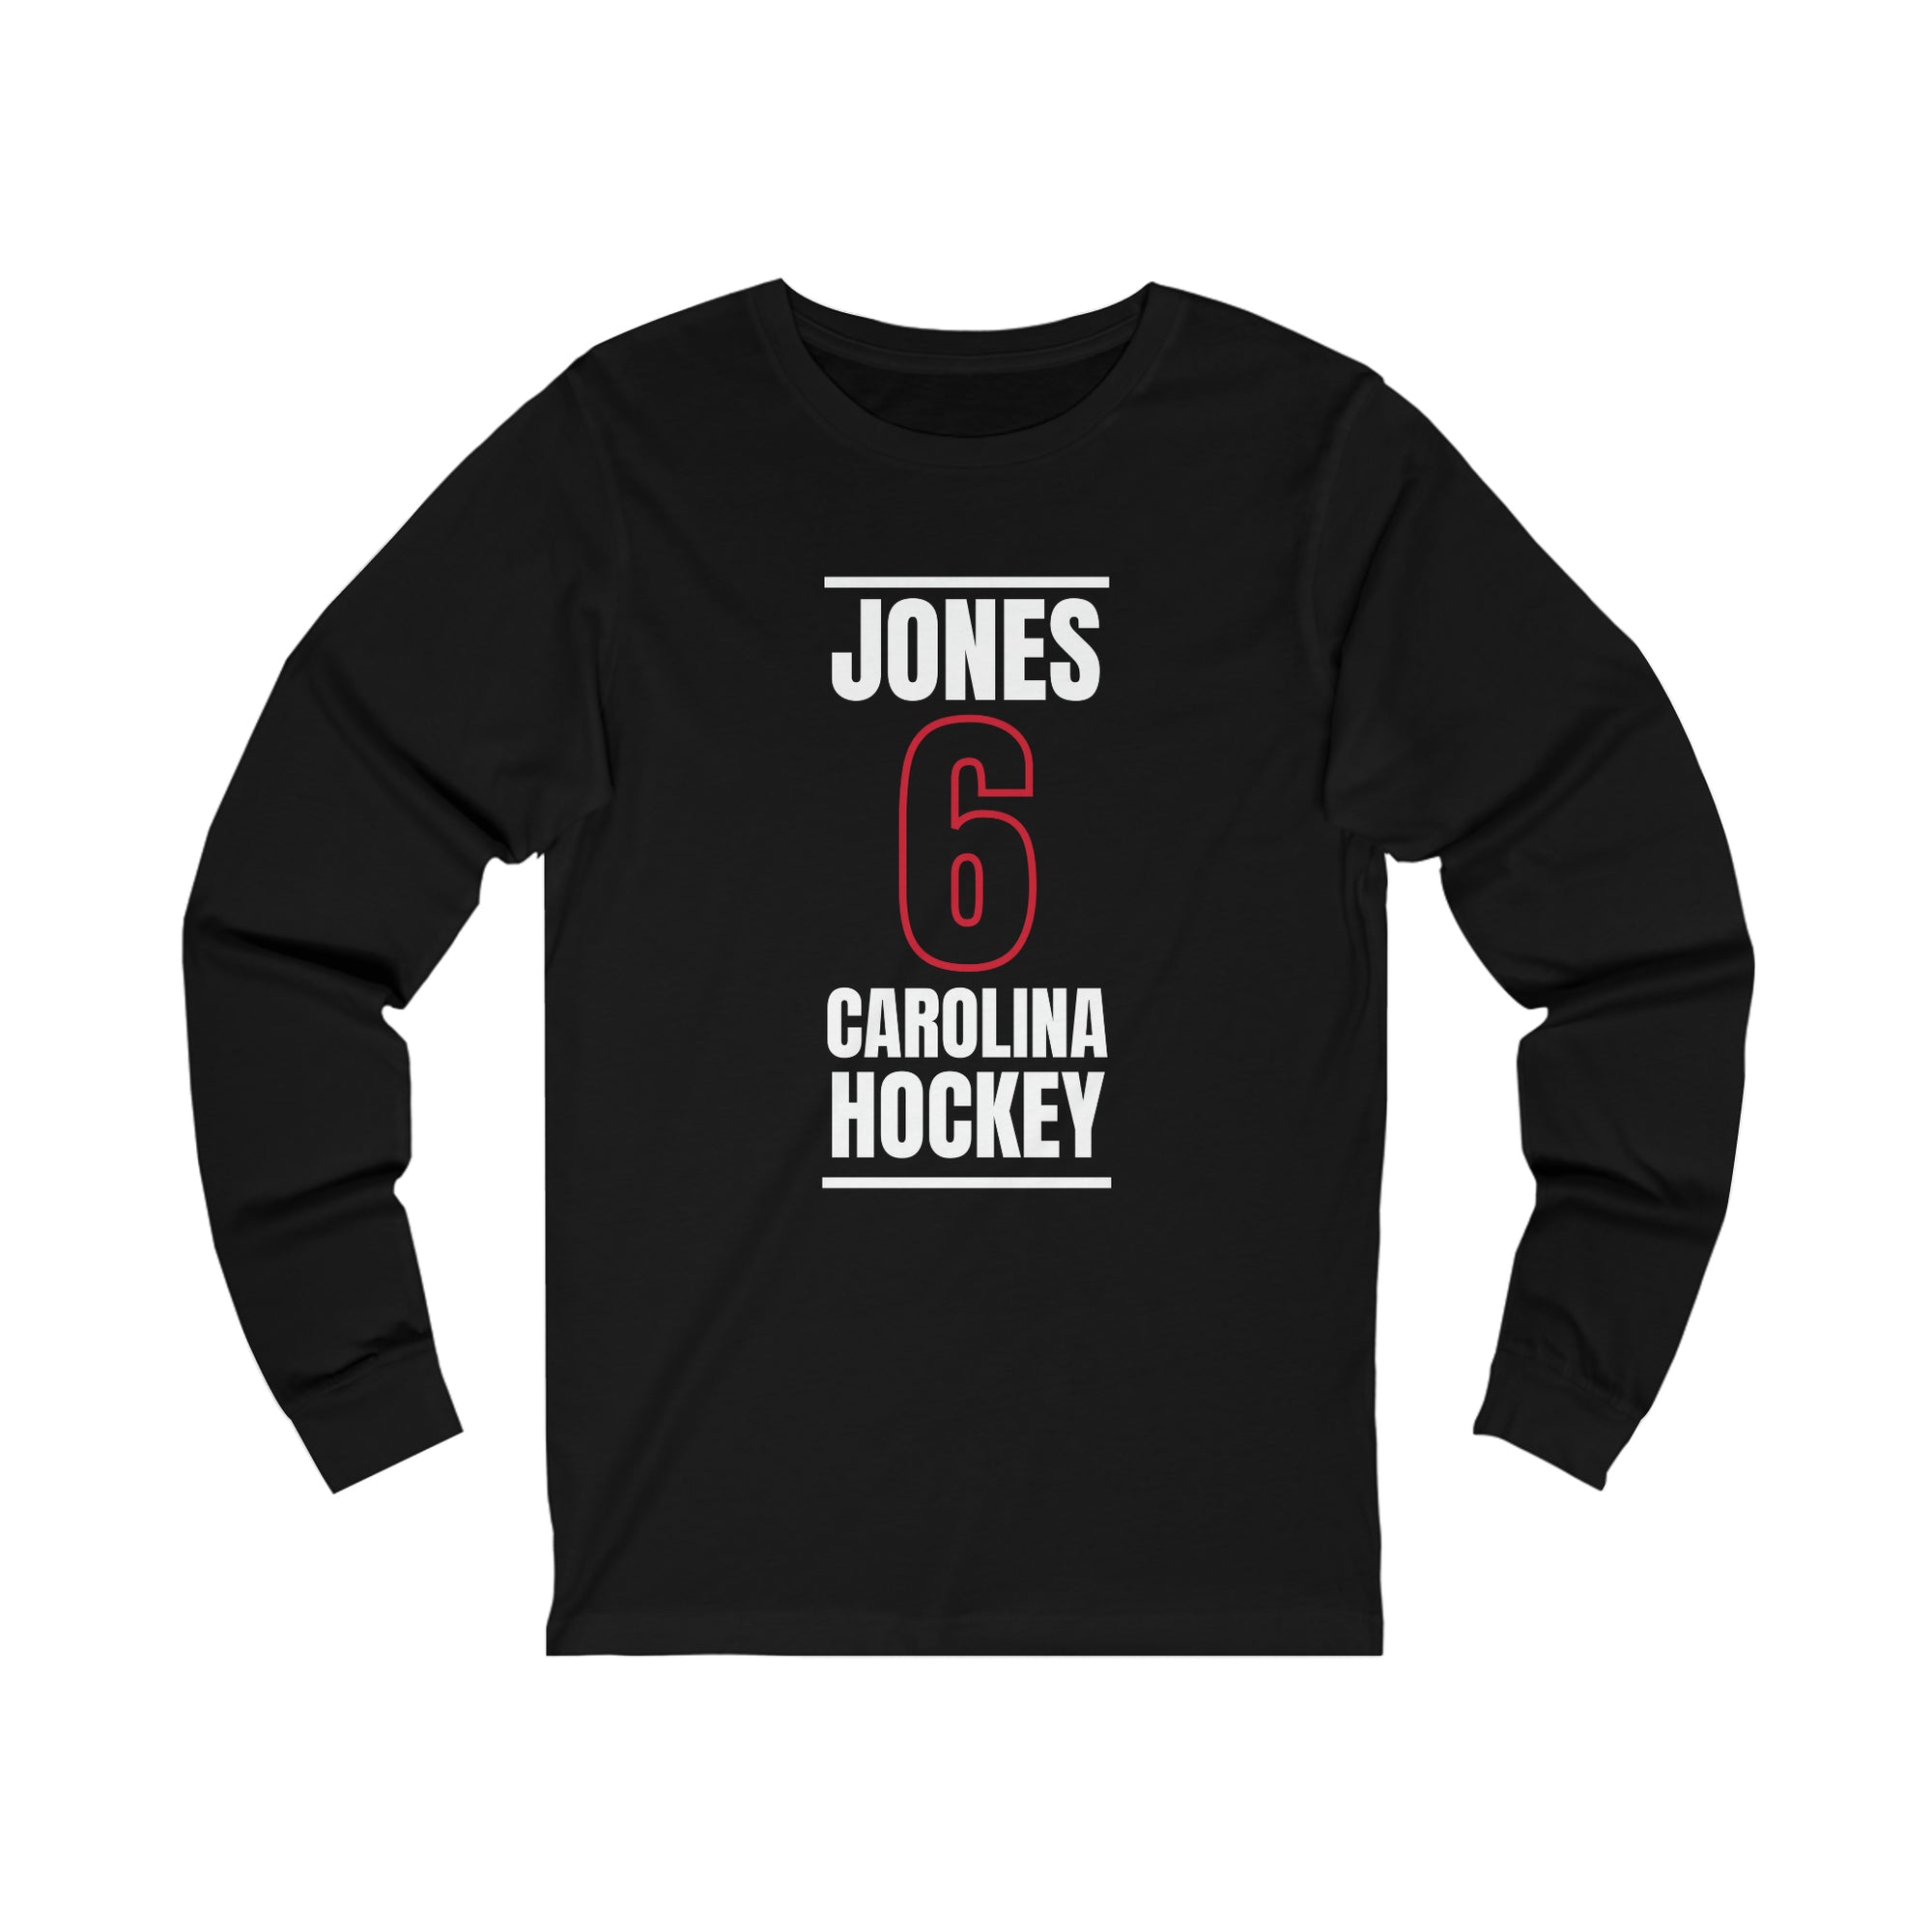 Jones 6 Carolina Hockey Black Vertical Design Unisex Jersey Long Sleeve Shirt